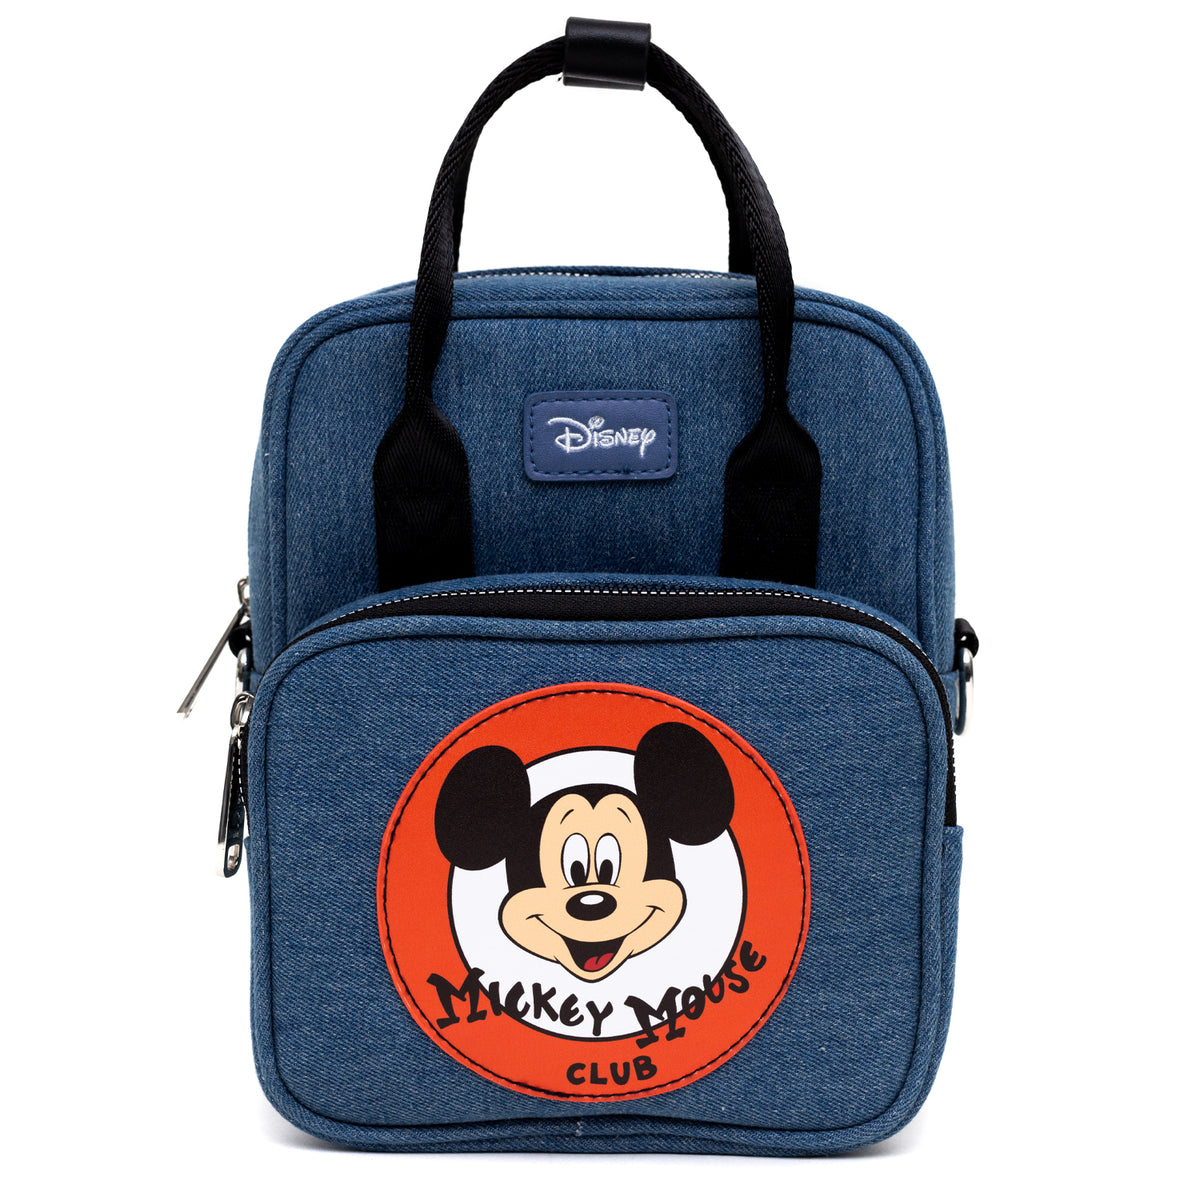 Disney 100 Mickey Mouse Club Deluxe Denim Crossbody Bag